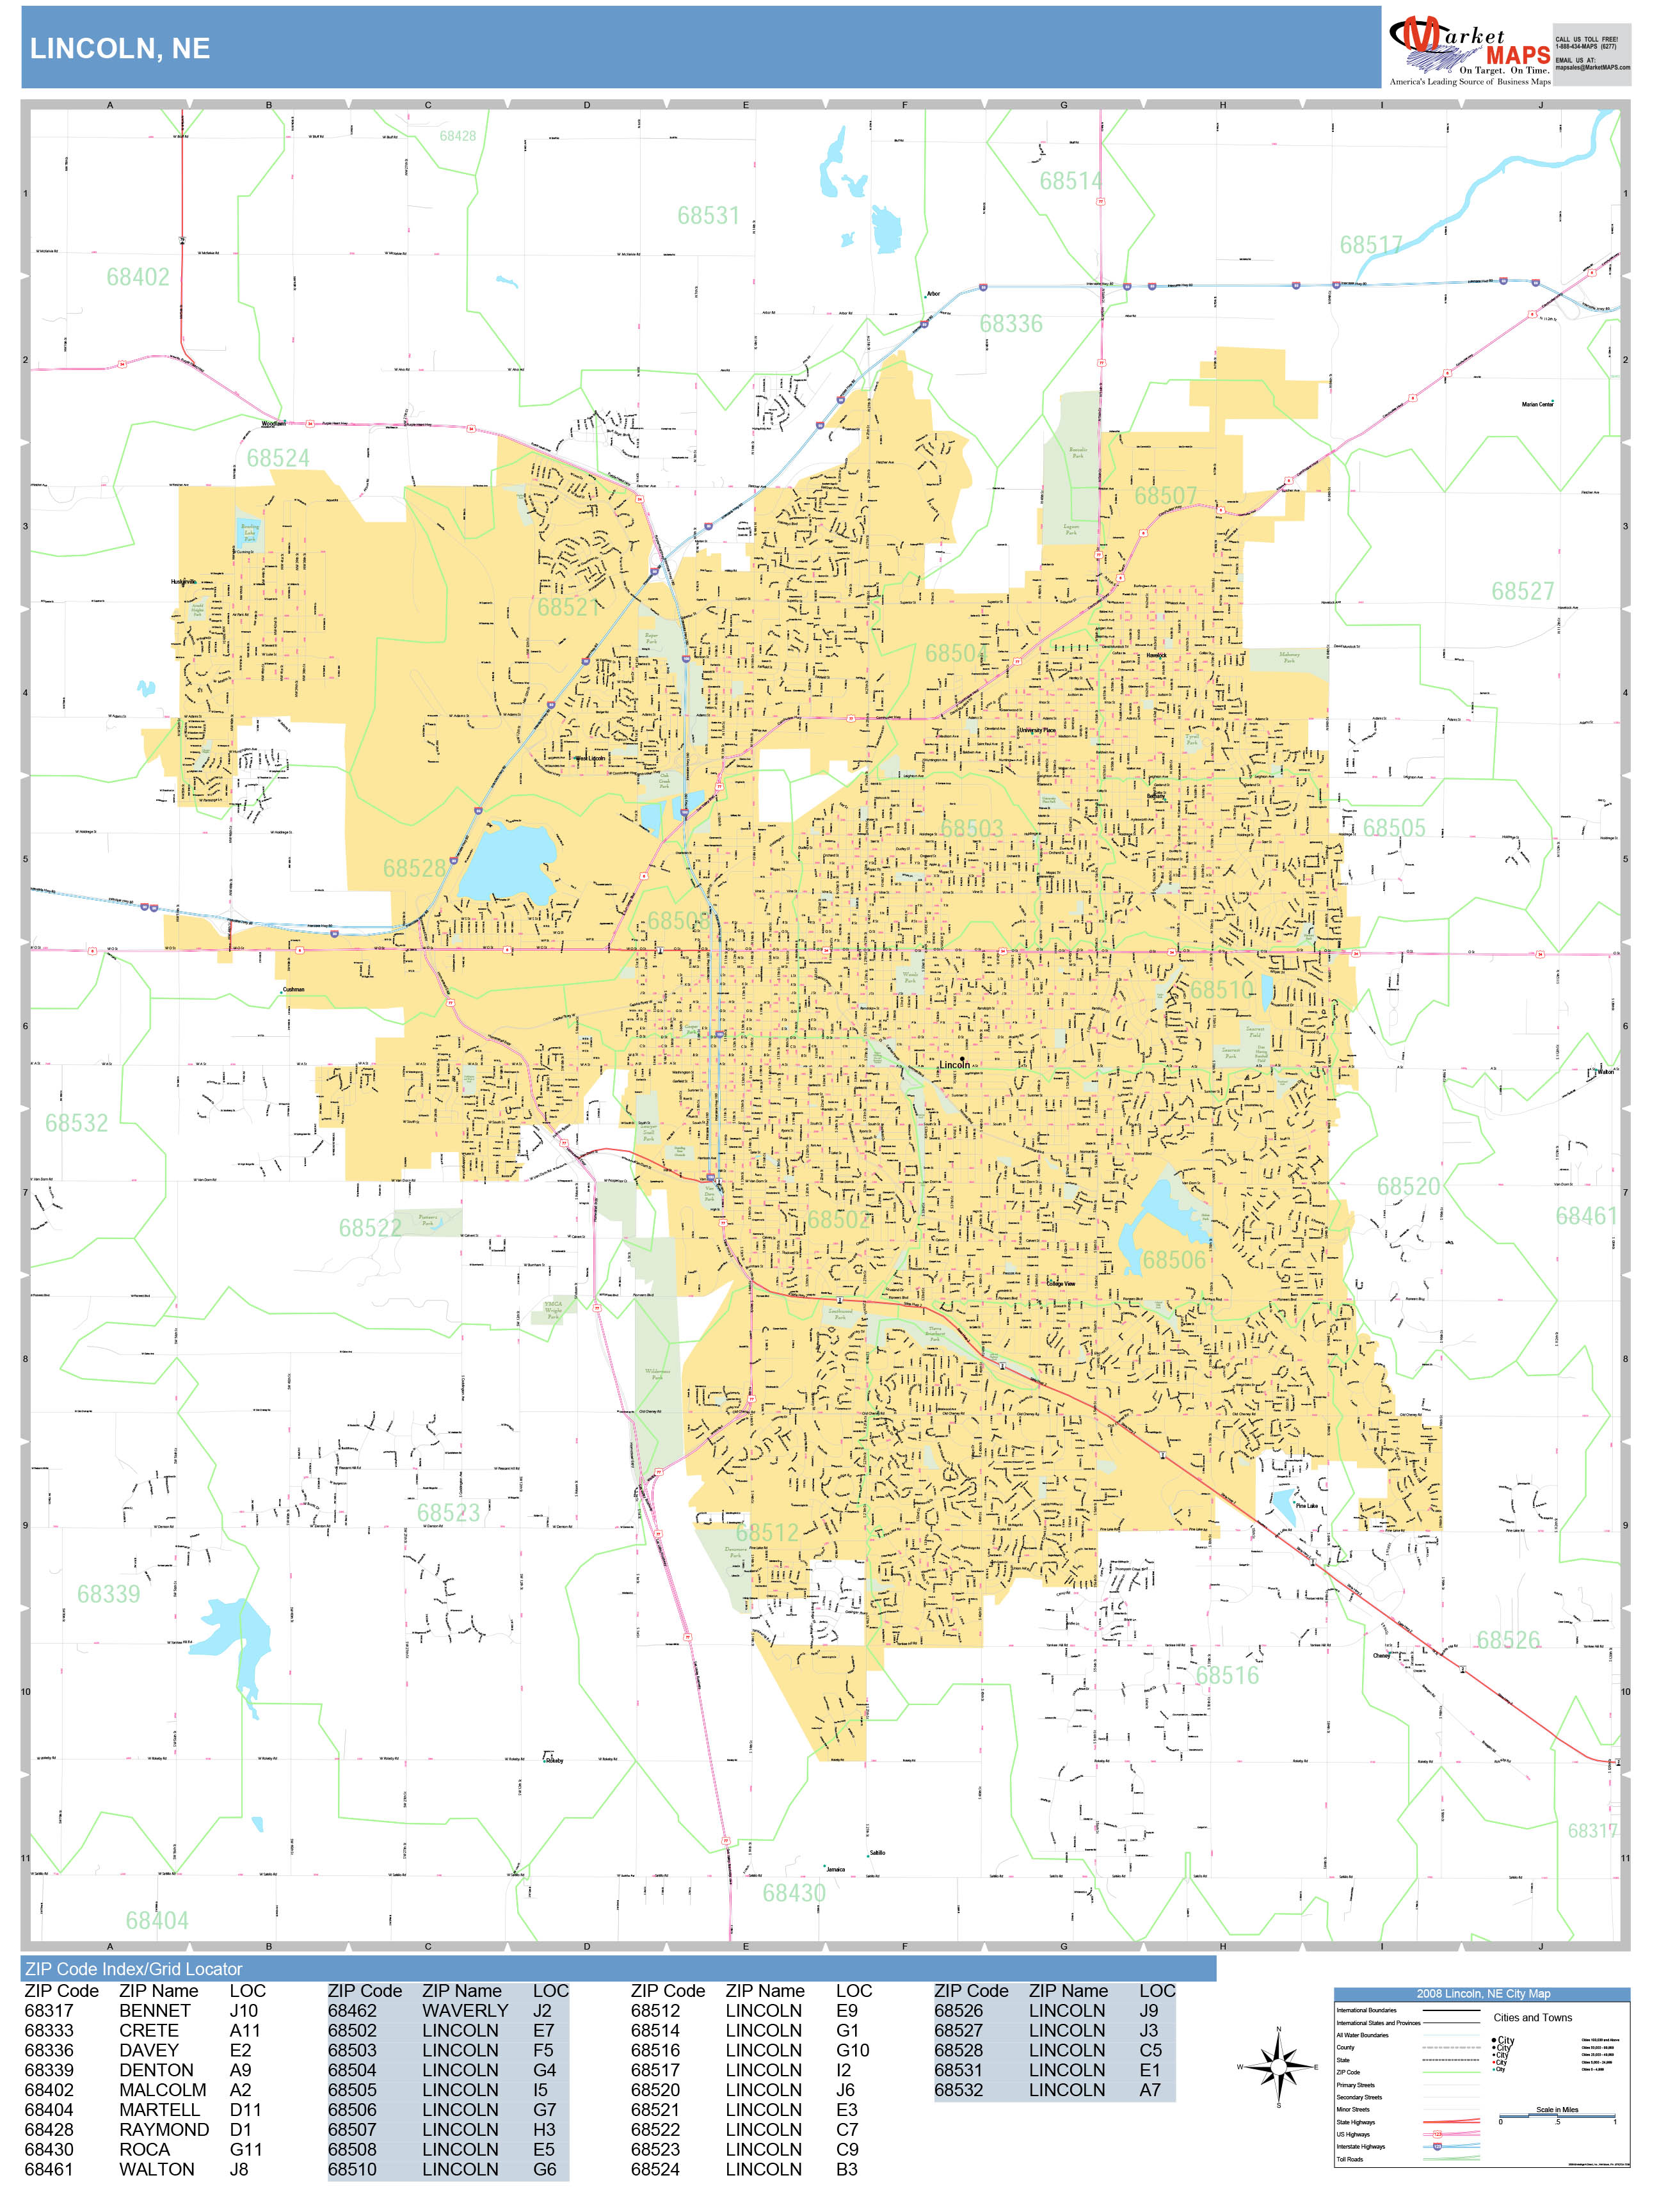 lincoln-nebraska-wall-map-basic-style-by-marketmaps-mapsales